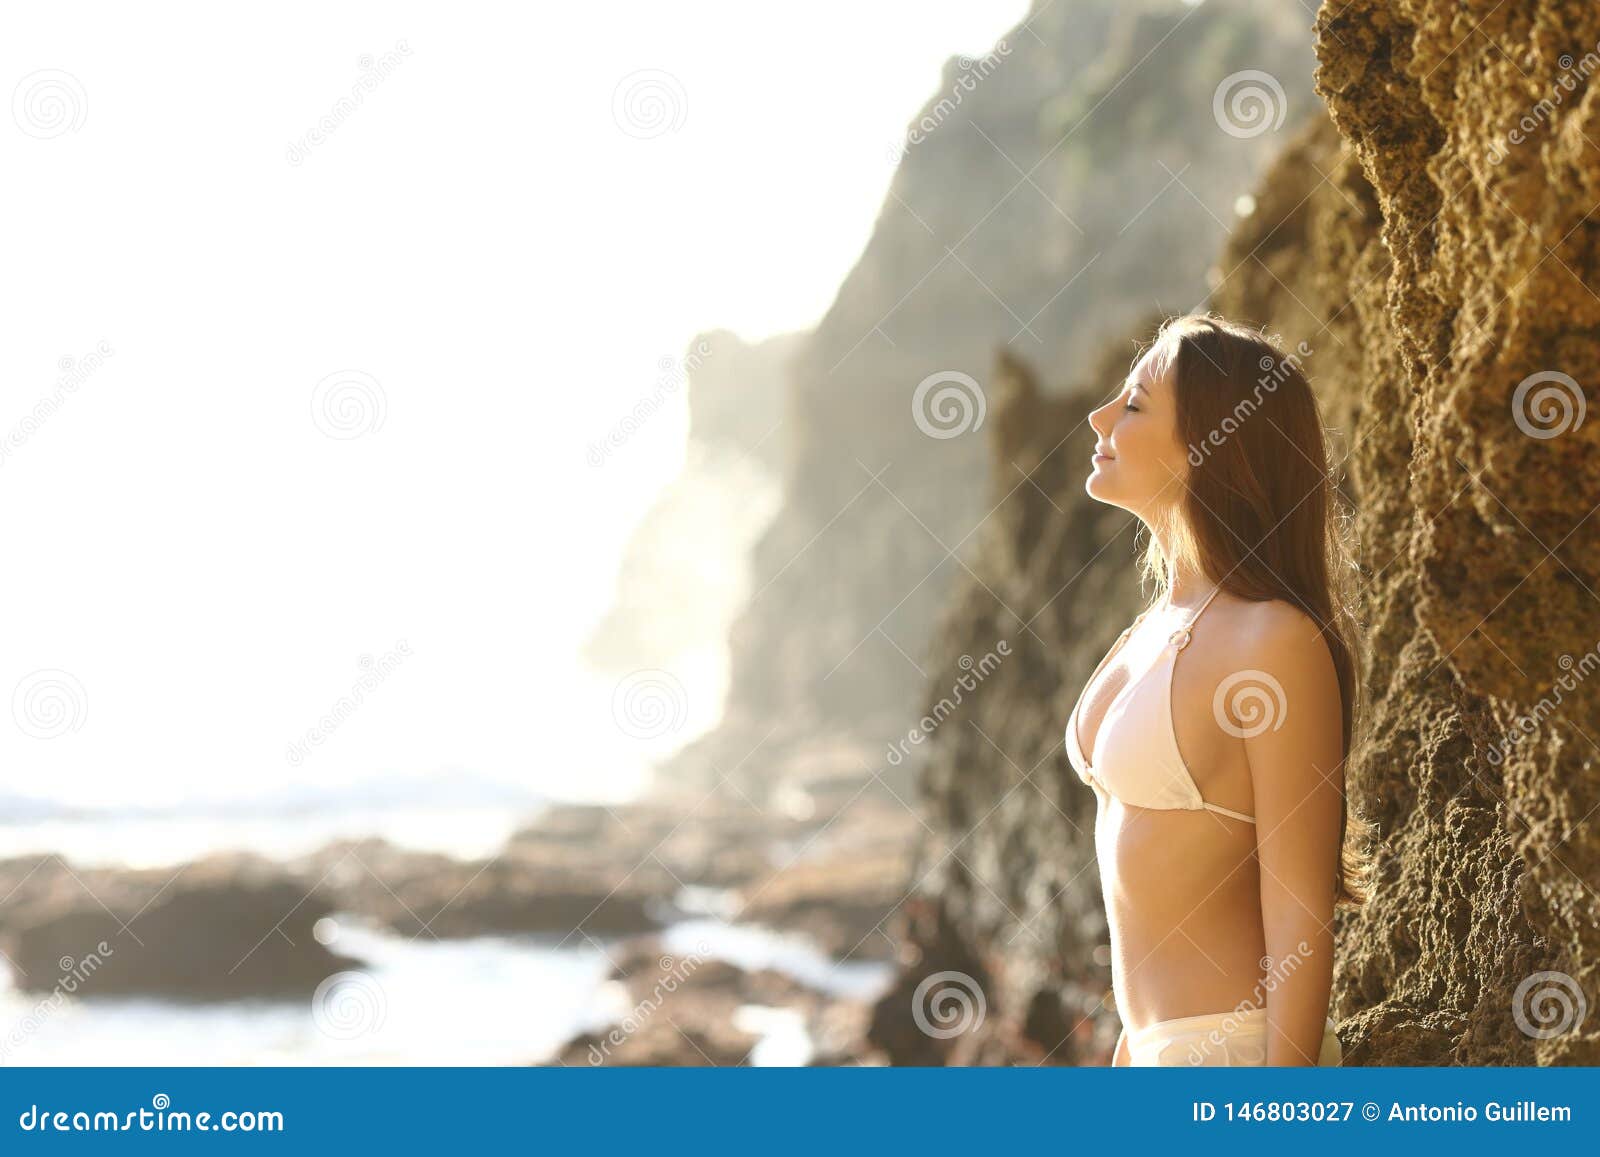 sunbather breathing fresh air on the beach